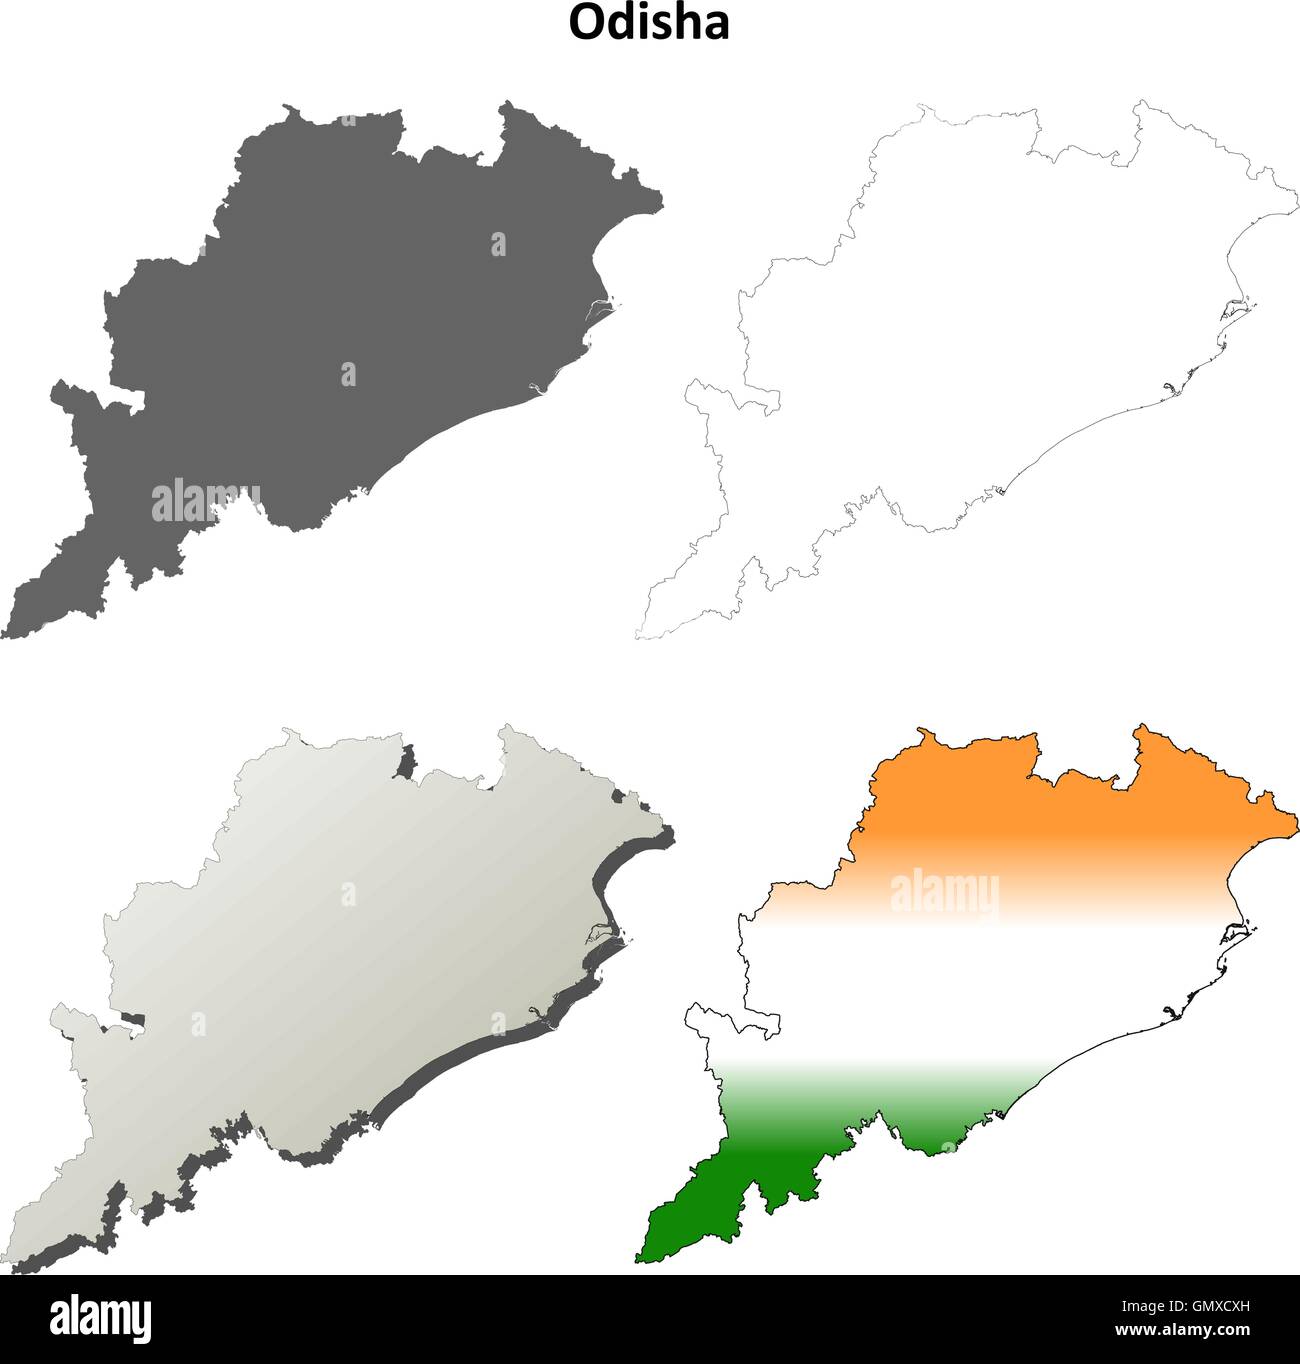 Odisha Map High Resolution Stock Photography and Images - Alamy